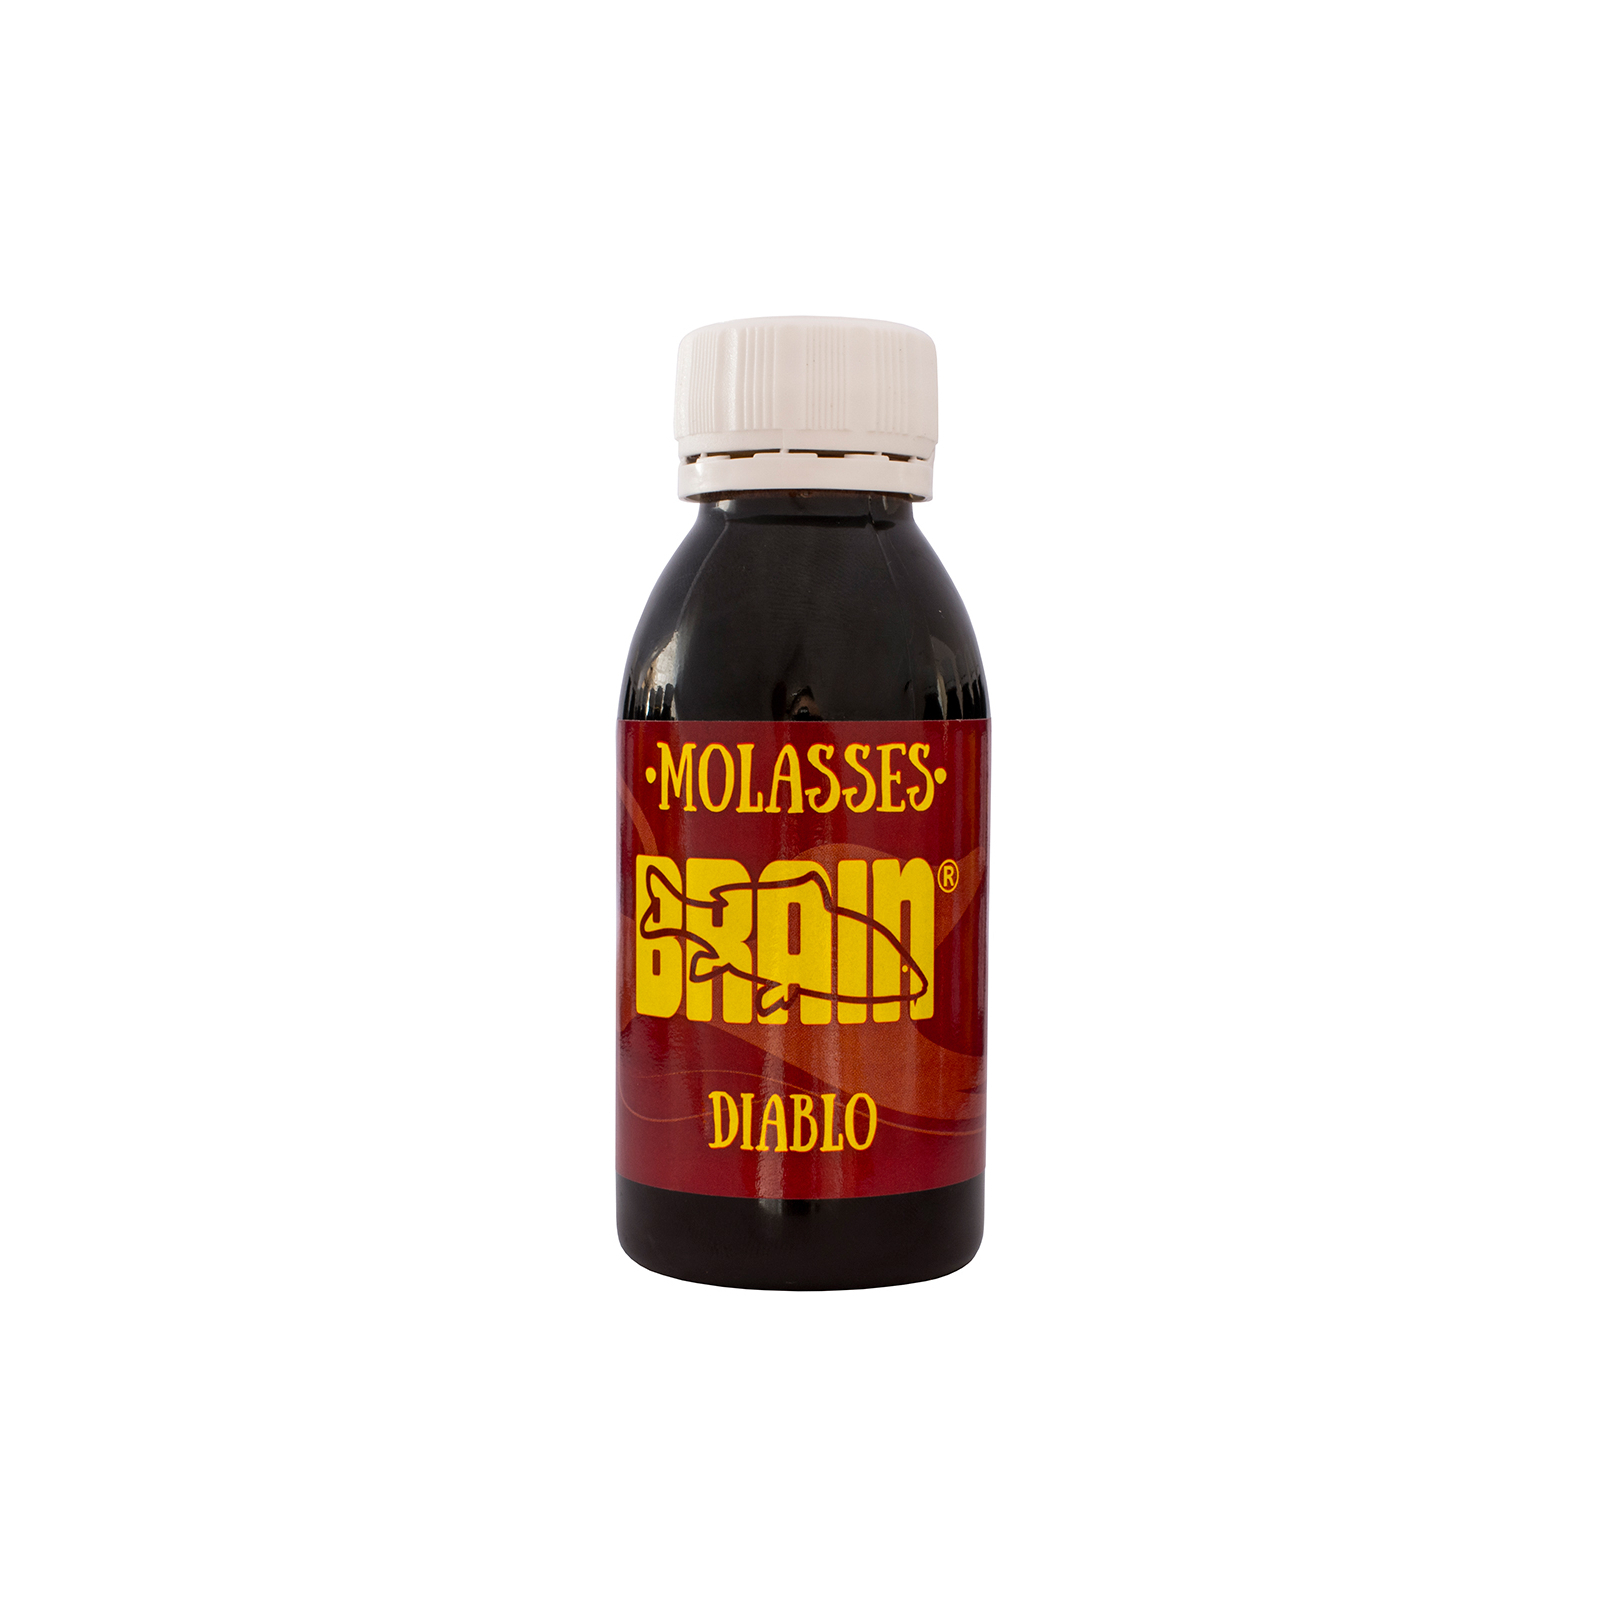 Добавка Brain fishing Molasses Diablo (специи), 120 ml (1858.00.62)